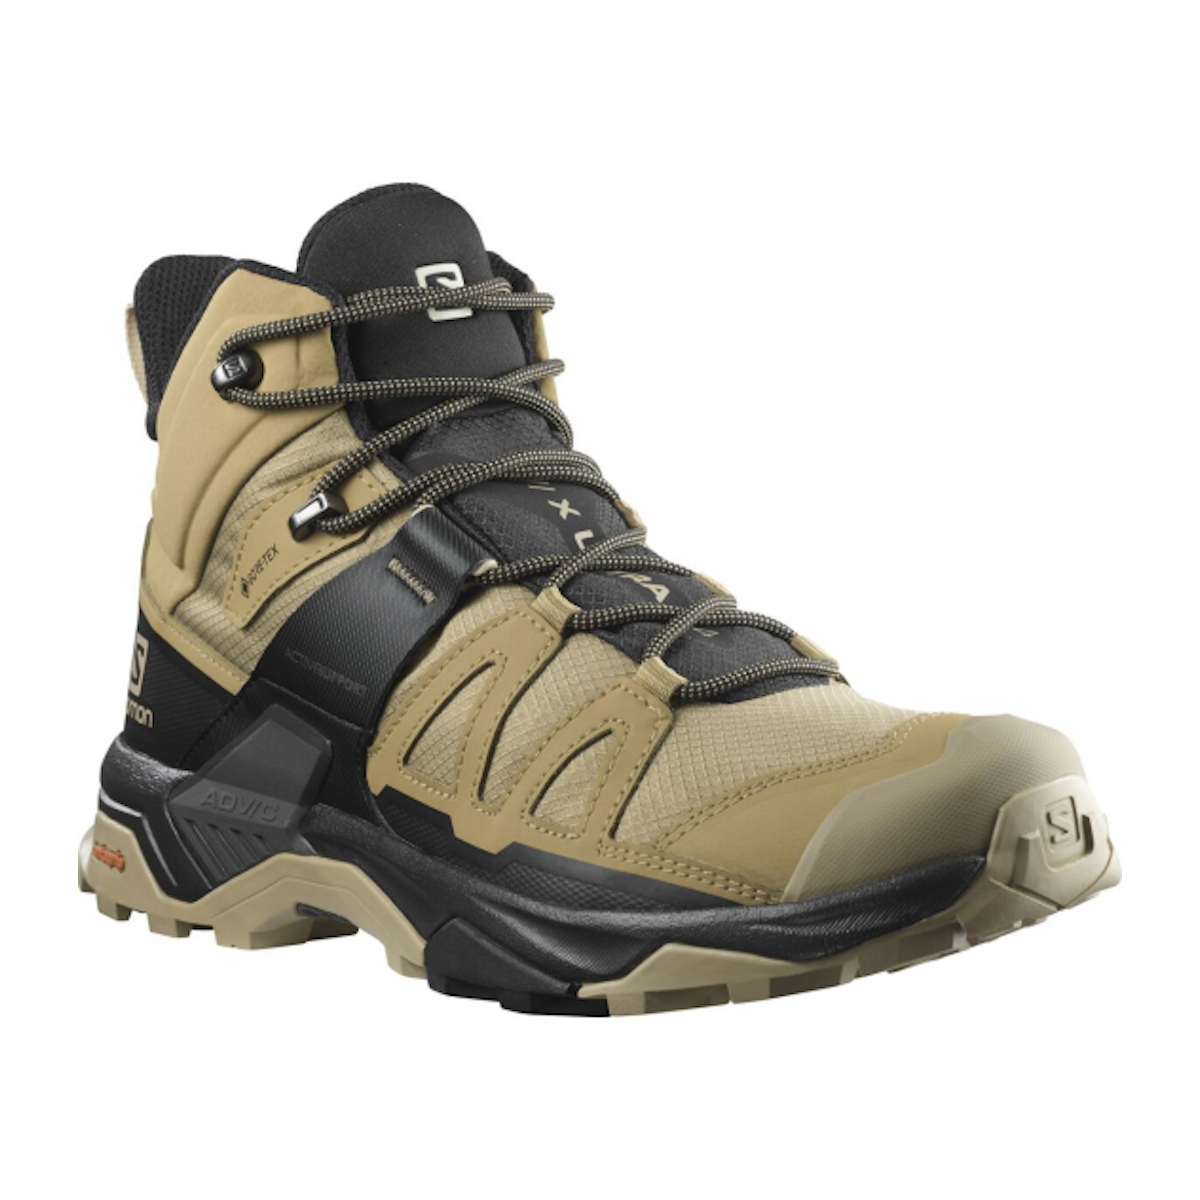 SALOMON X ULTRA 4 MID GTX hiking footwear - brown/black